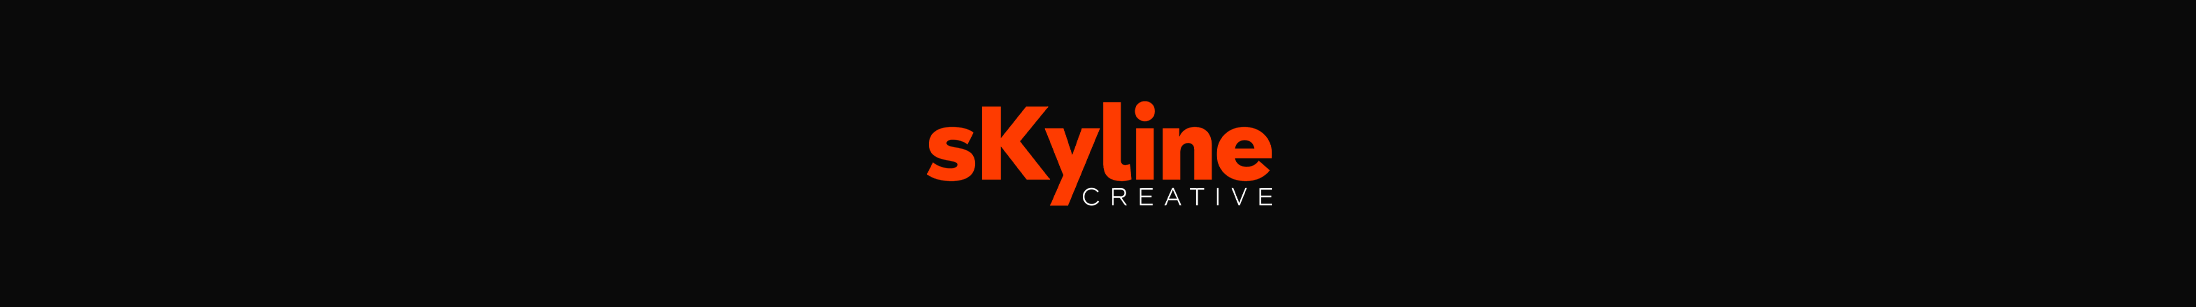 Baner profilu użytkownika sKyline creative